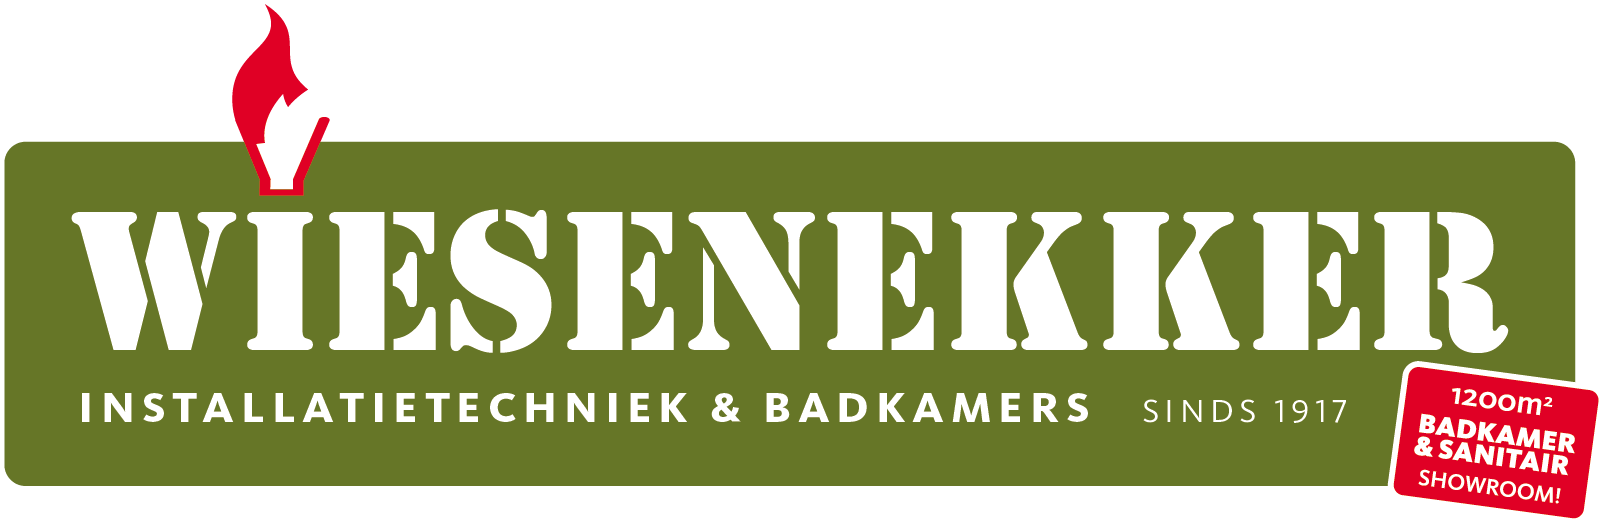 Wiesenekker Badkamers en Installatiewerk logo